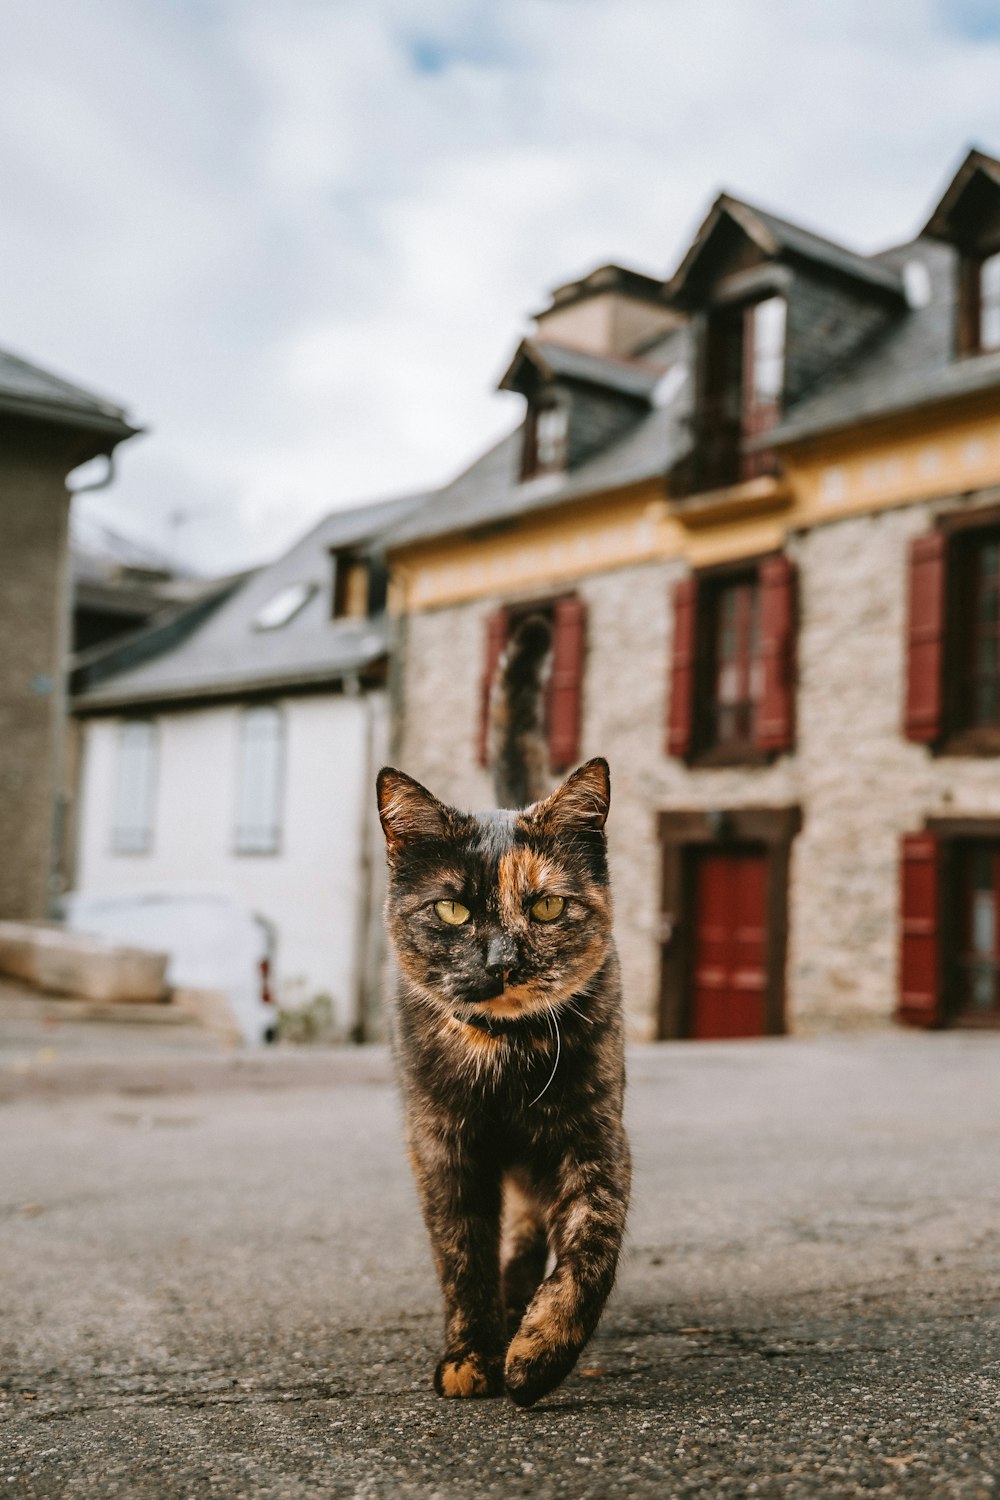 a cat that is walking down a street